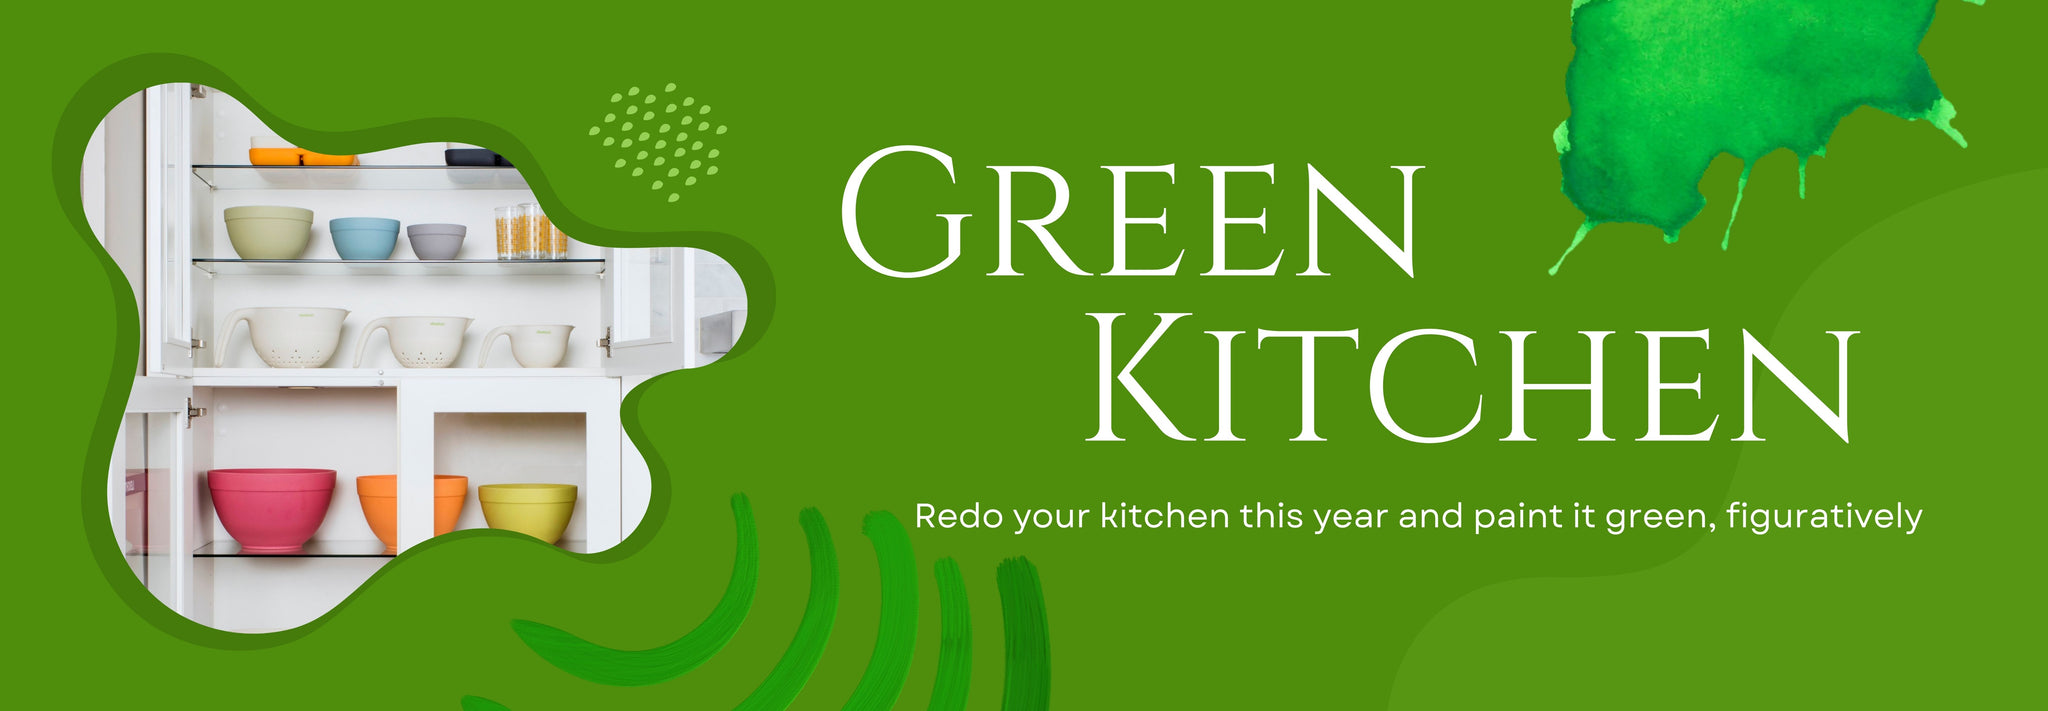 The New Green Kitchen